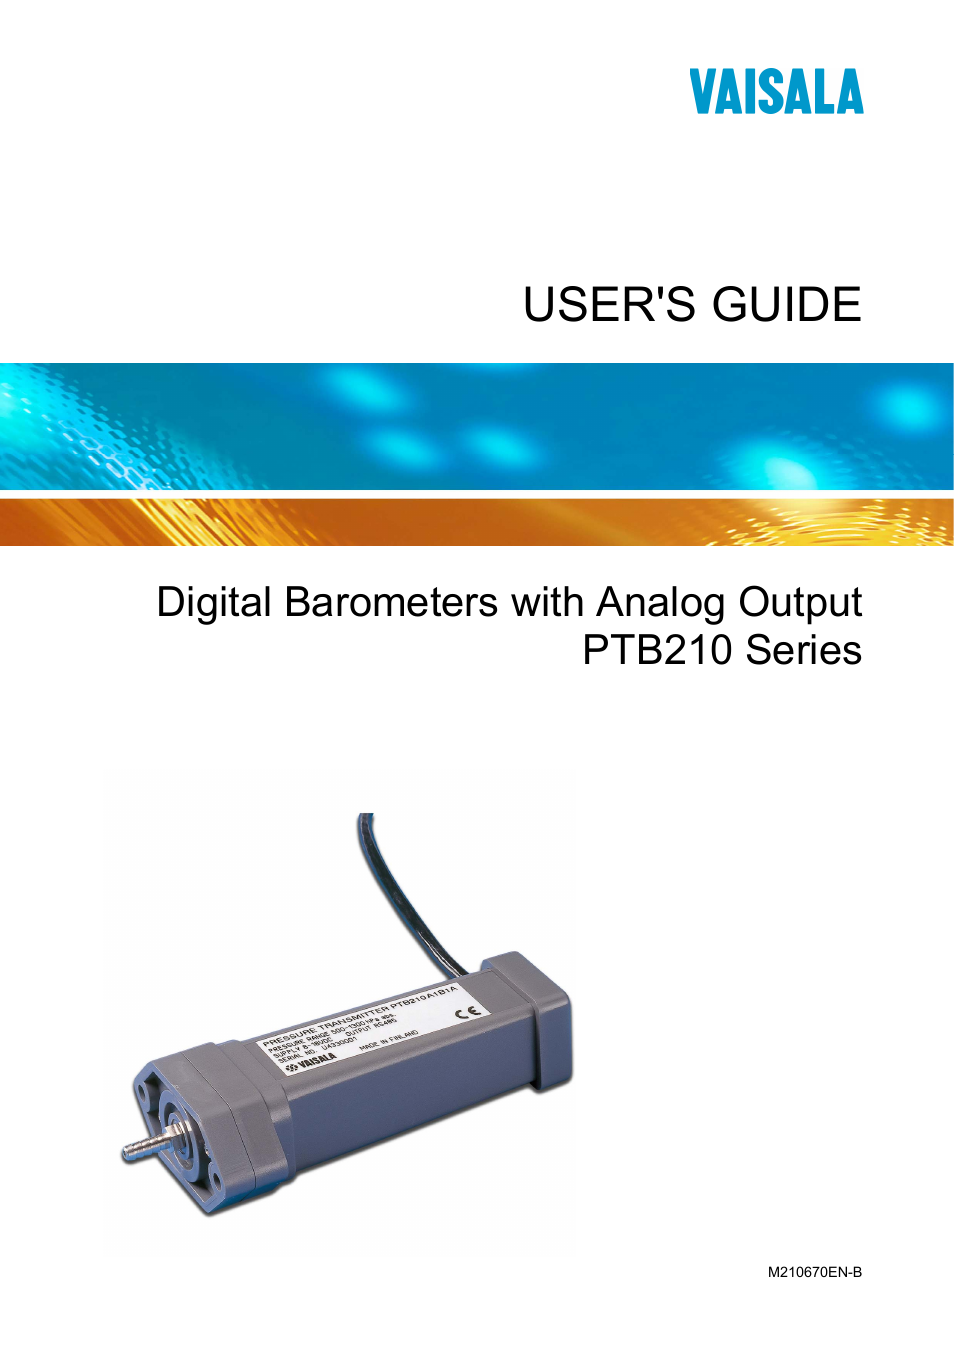 PTB210 (analog)